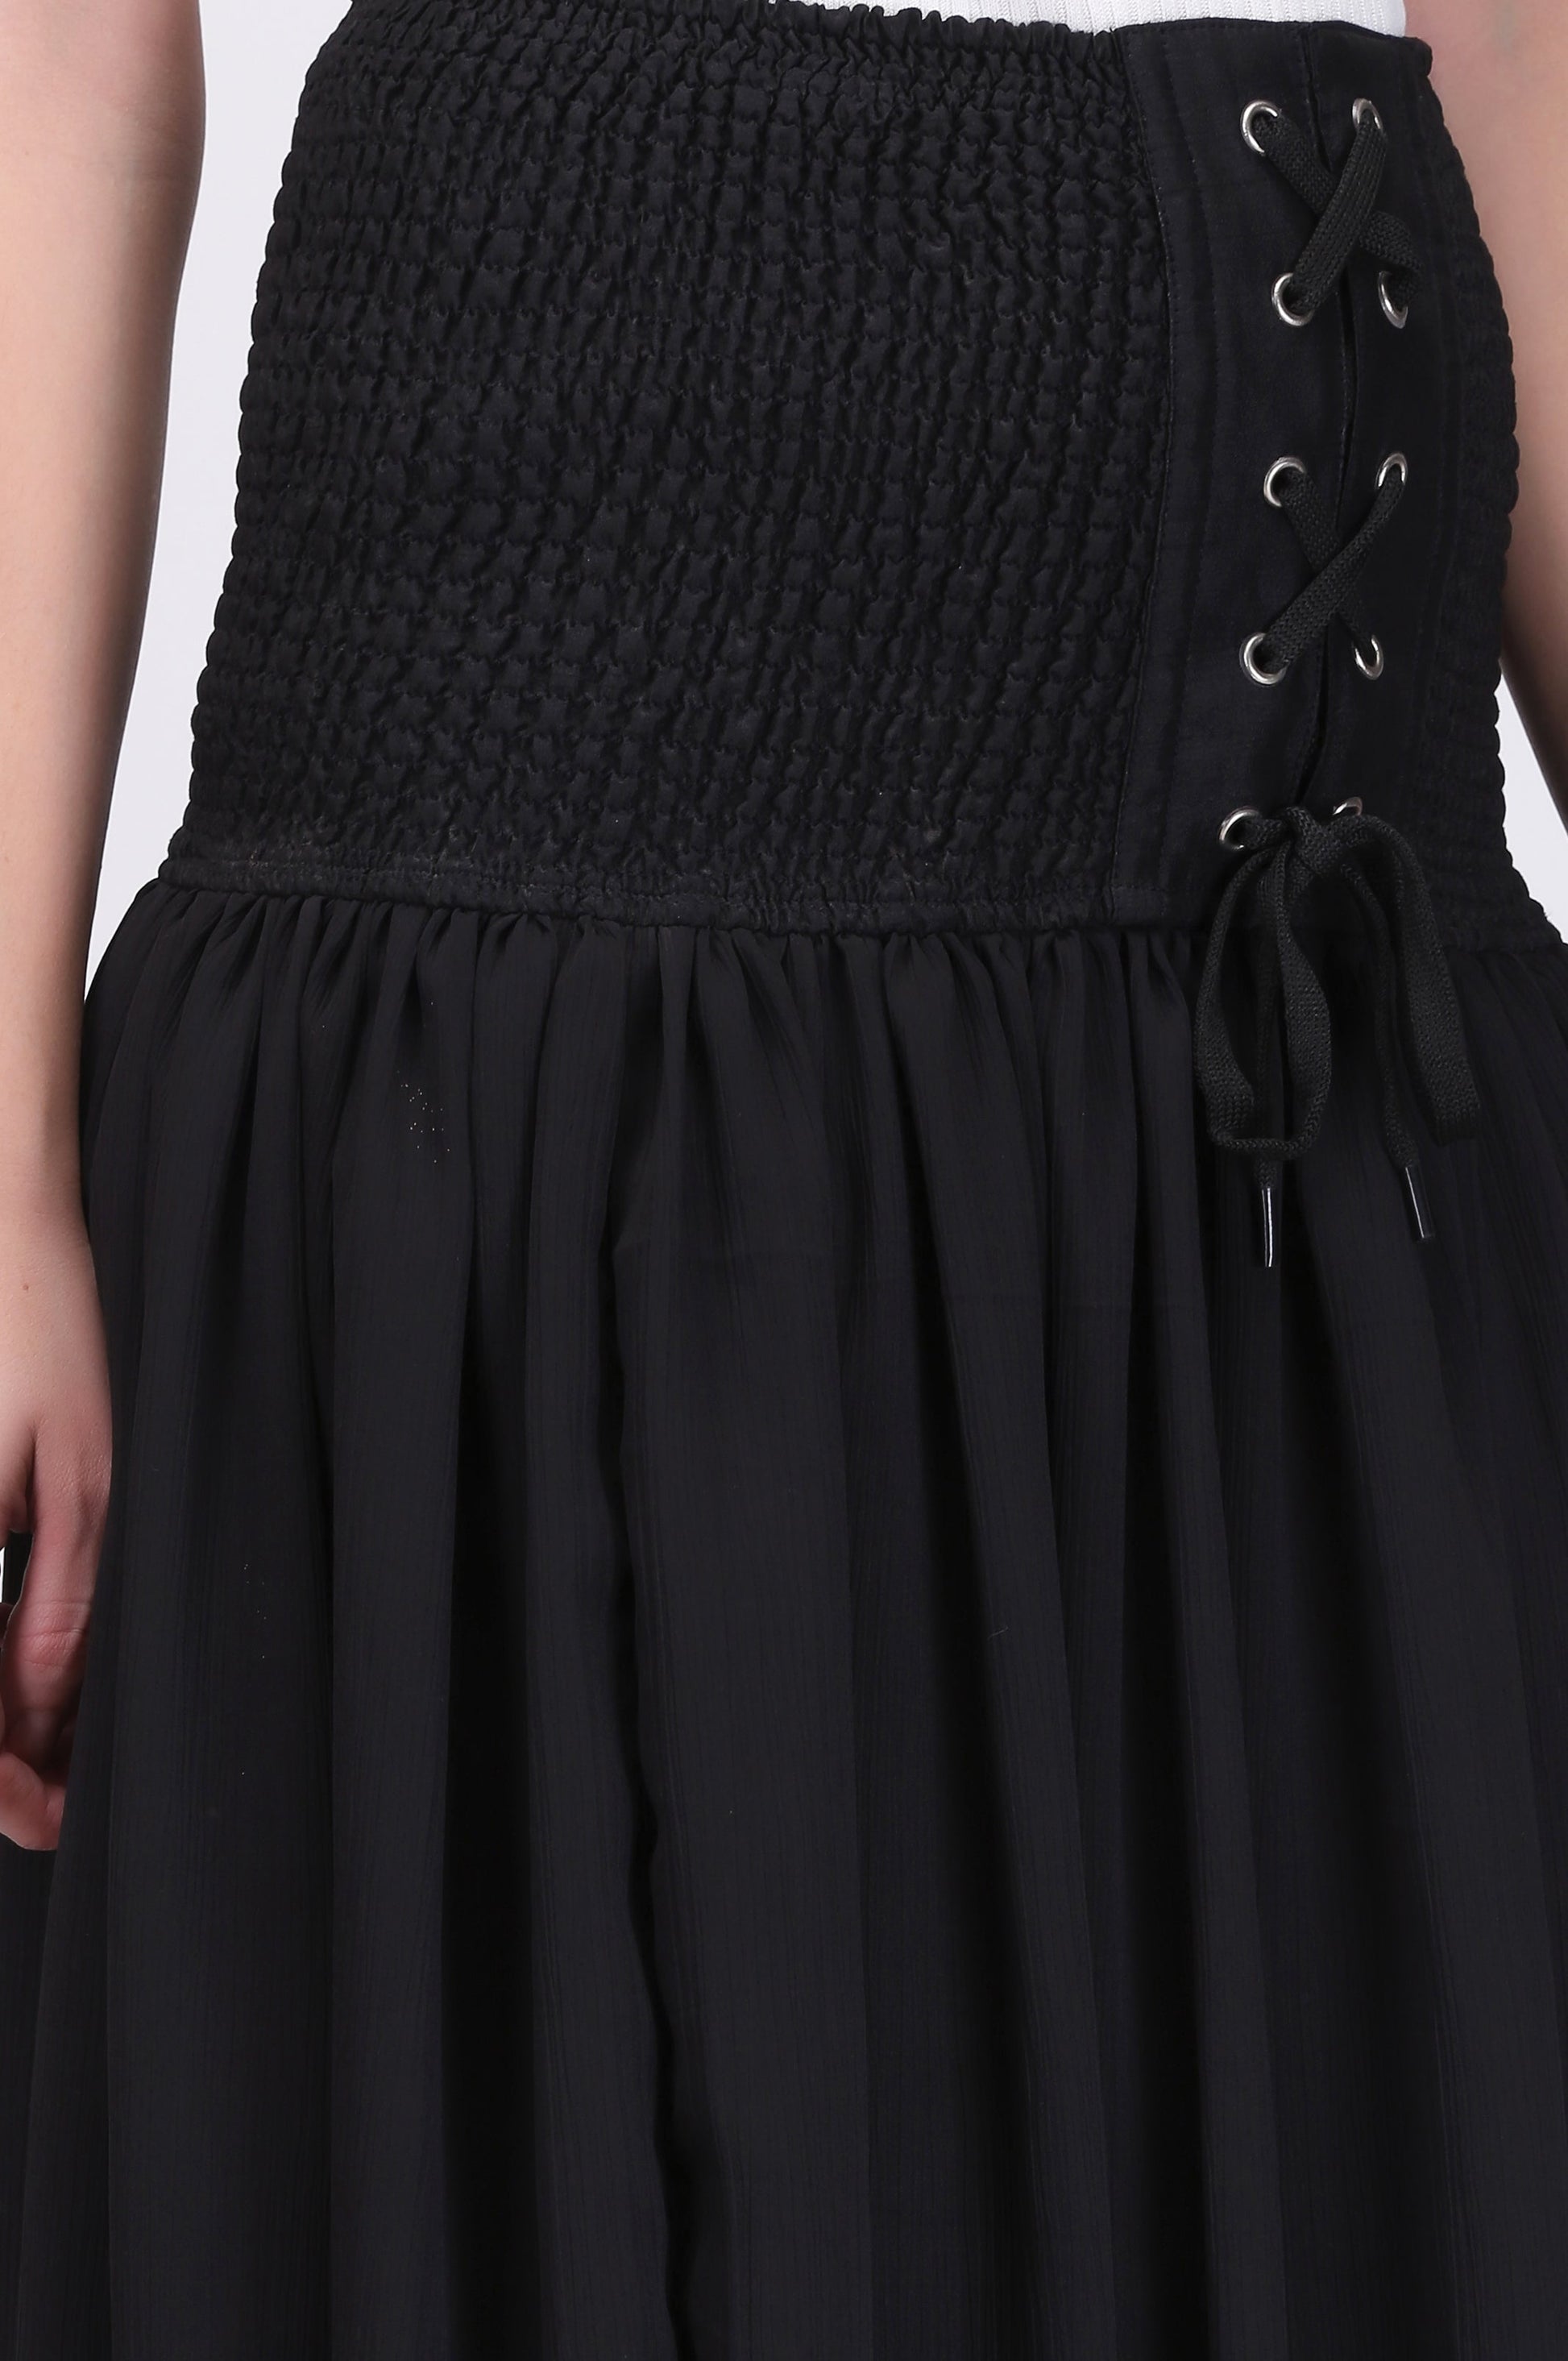 black chiffon long skirt - Corset Revolution